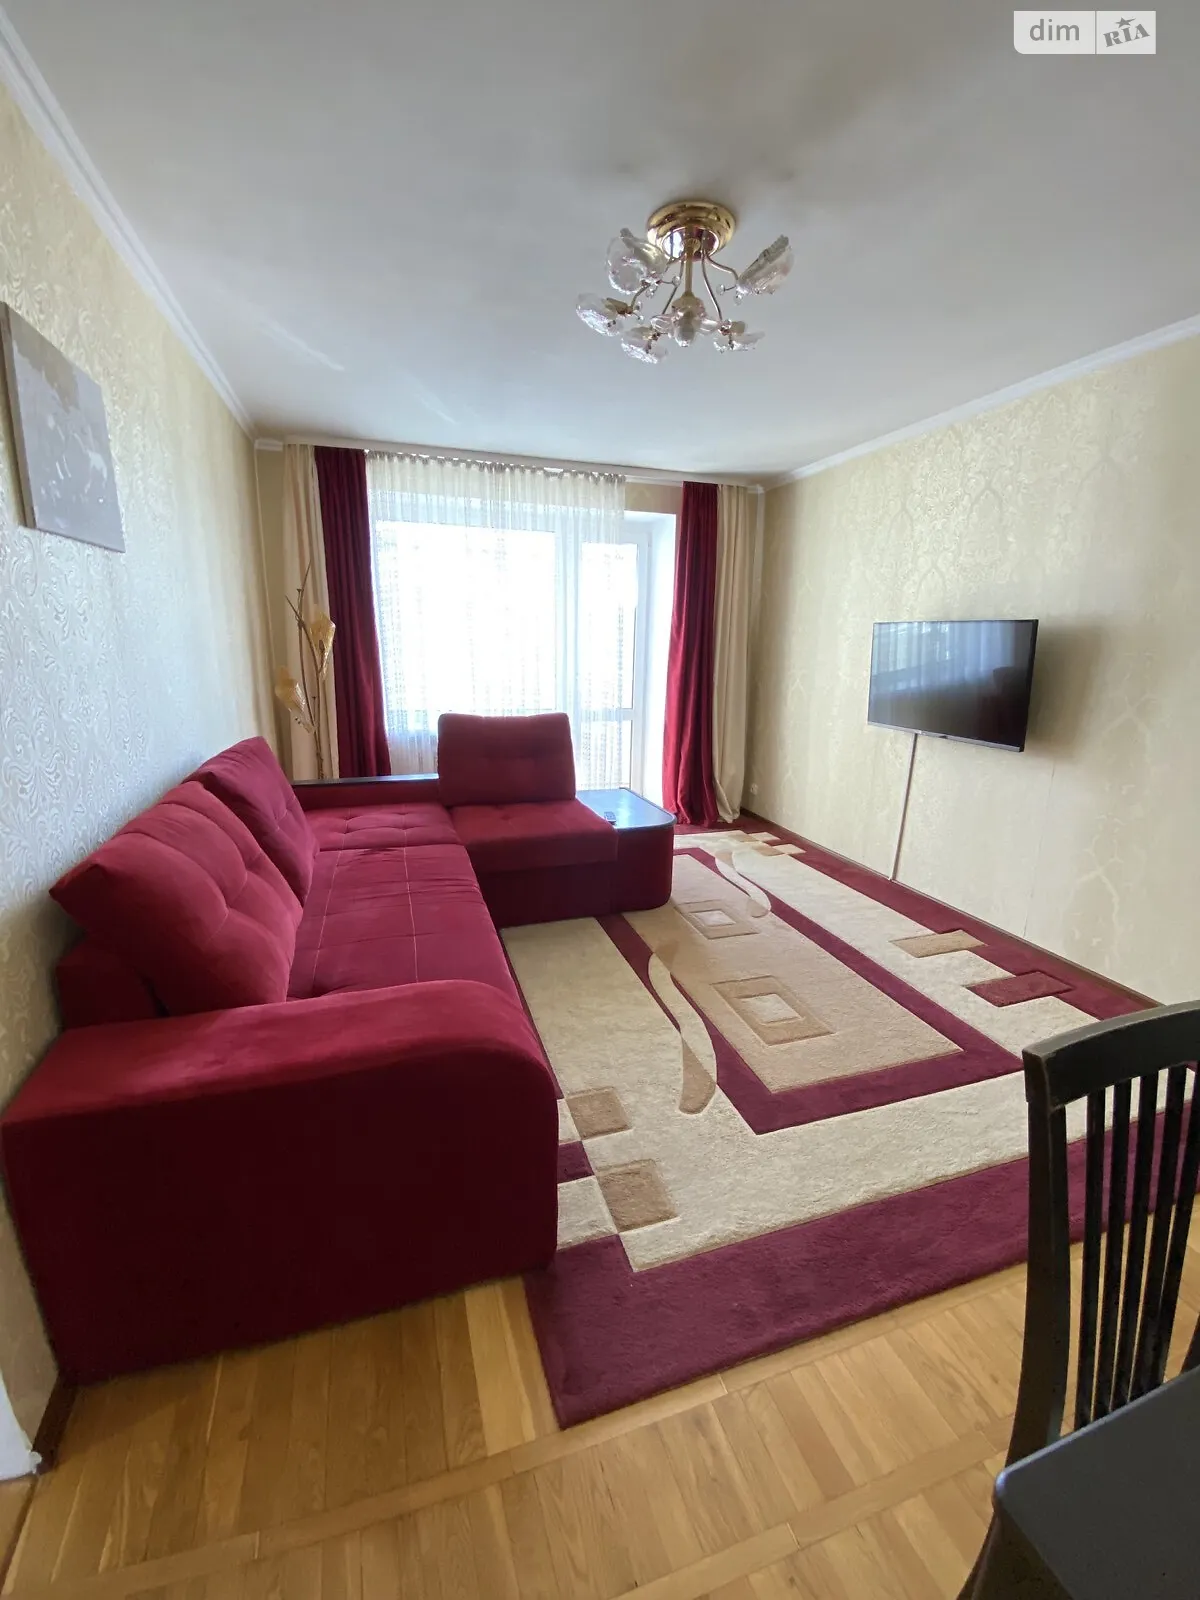 3-кімнатна квартира 62.4 кв. м у Луцьку, цена: 56500 $